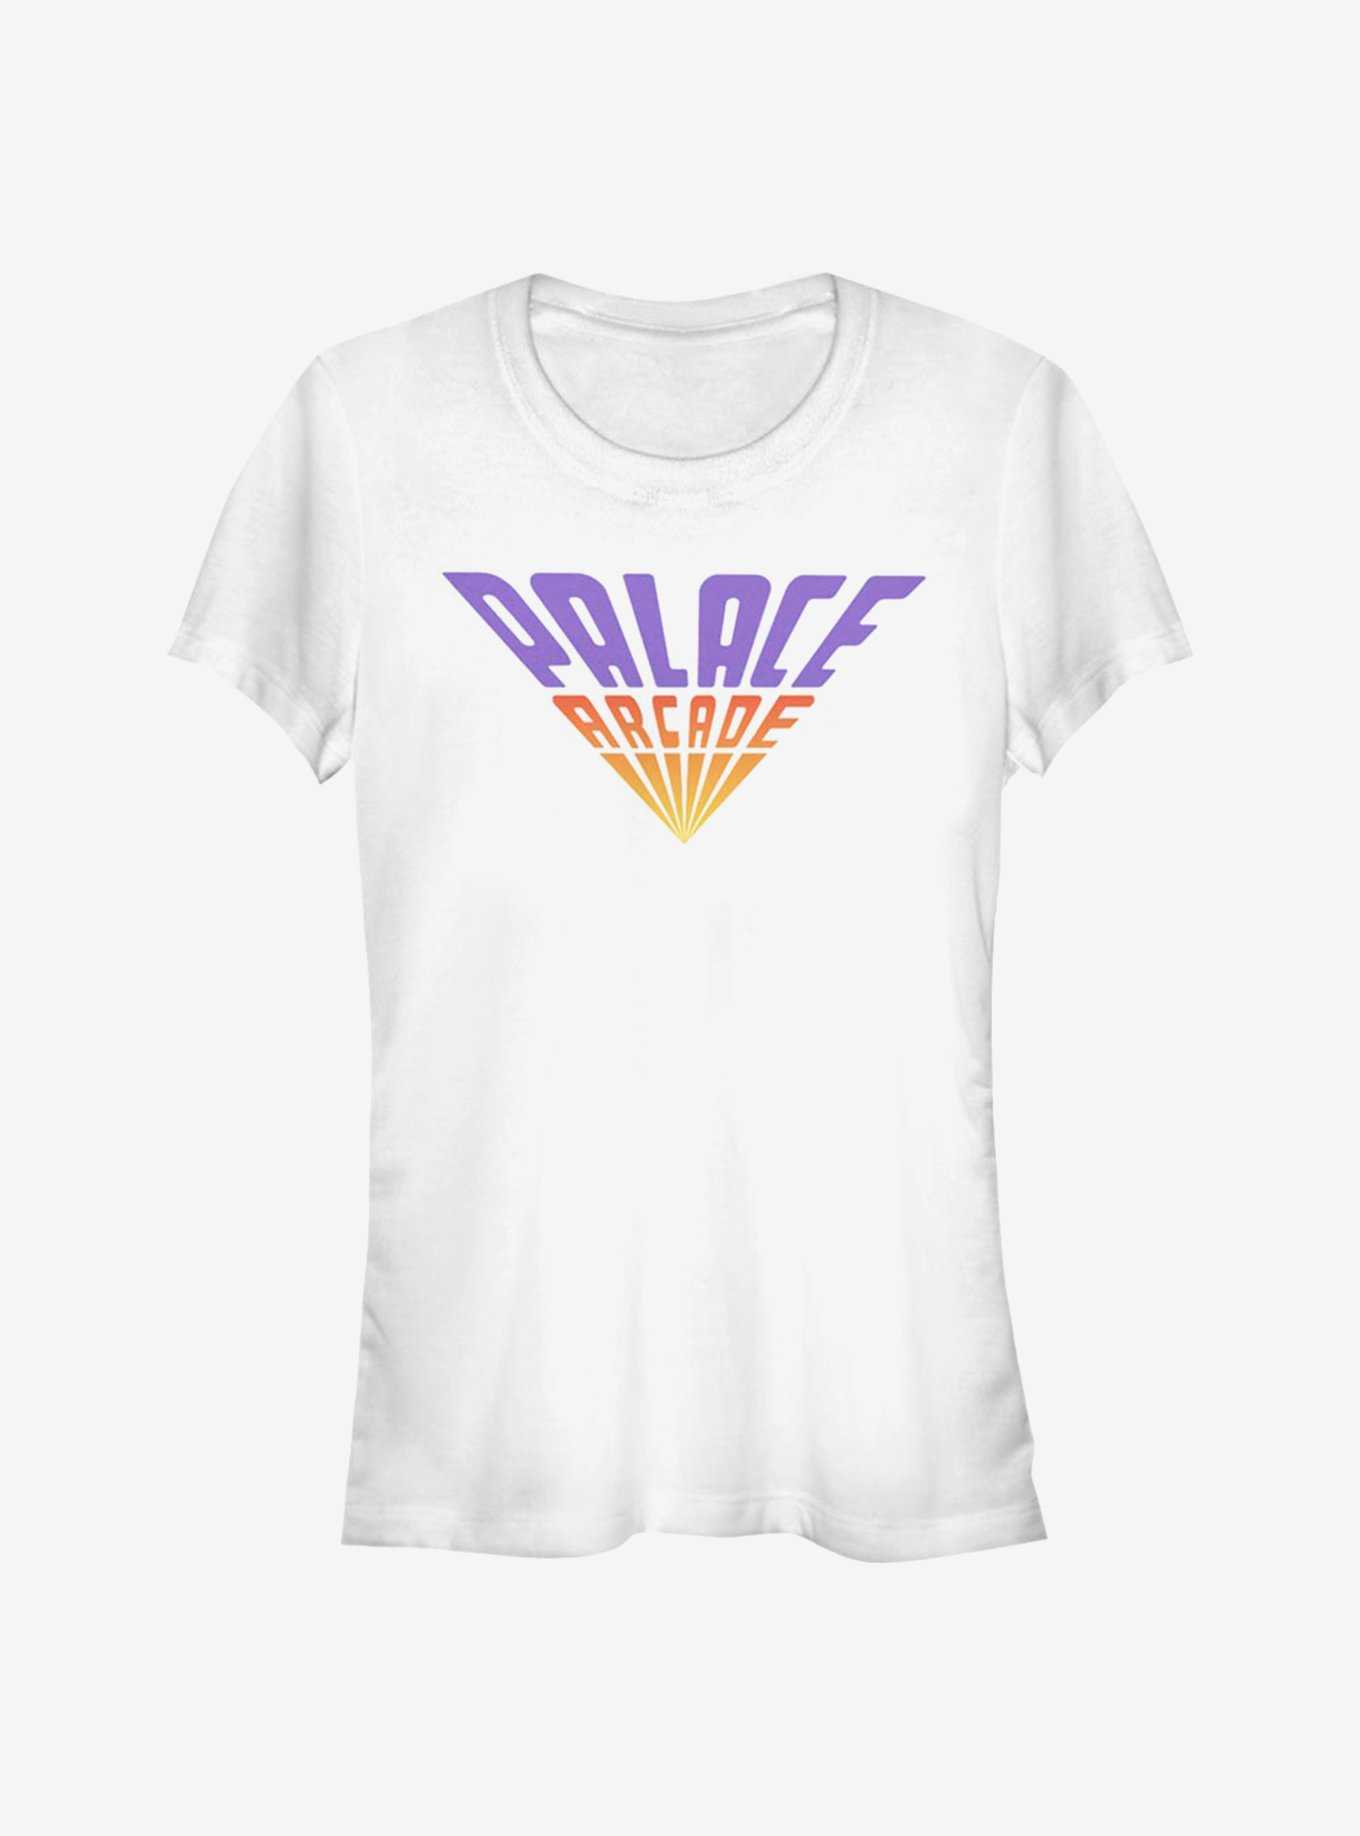 Stranger Things Palace Arcade Girls T-Shirt, , hi-res